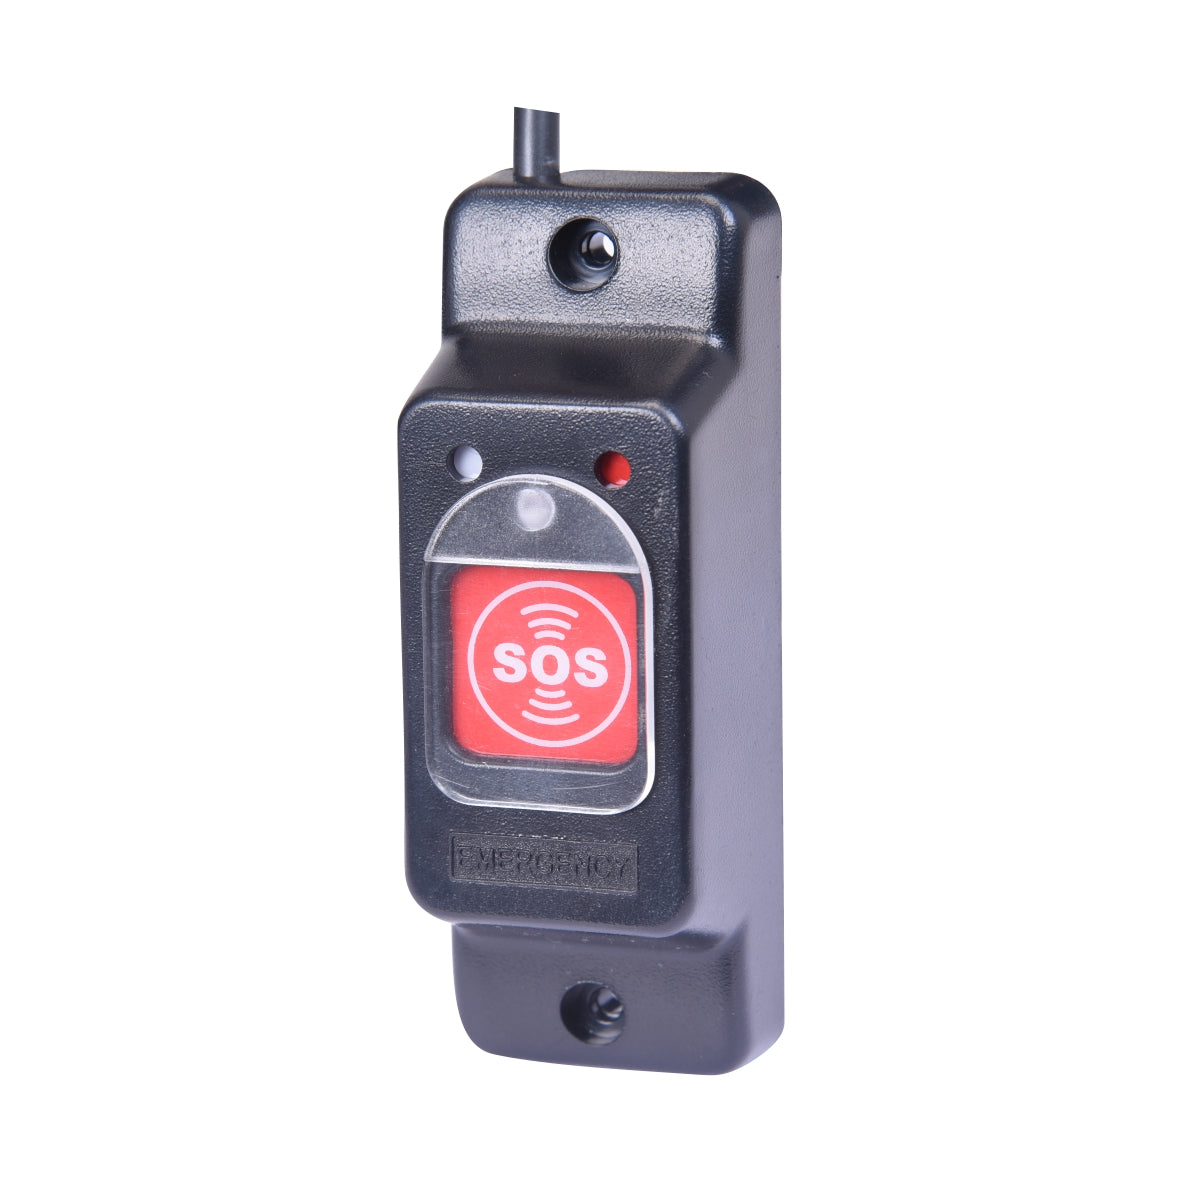 iota Emergency Panic Switch iota704 Compatible with AIS 140